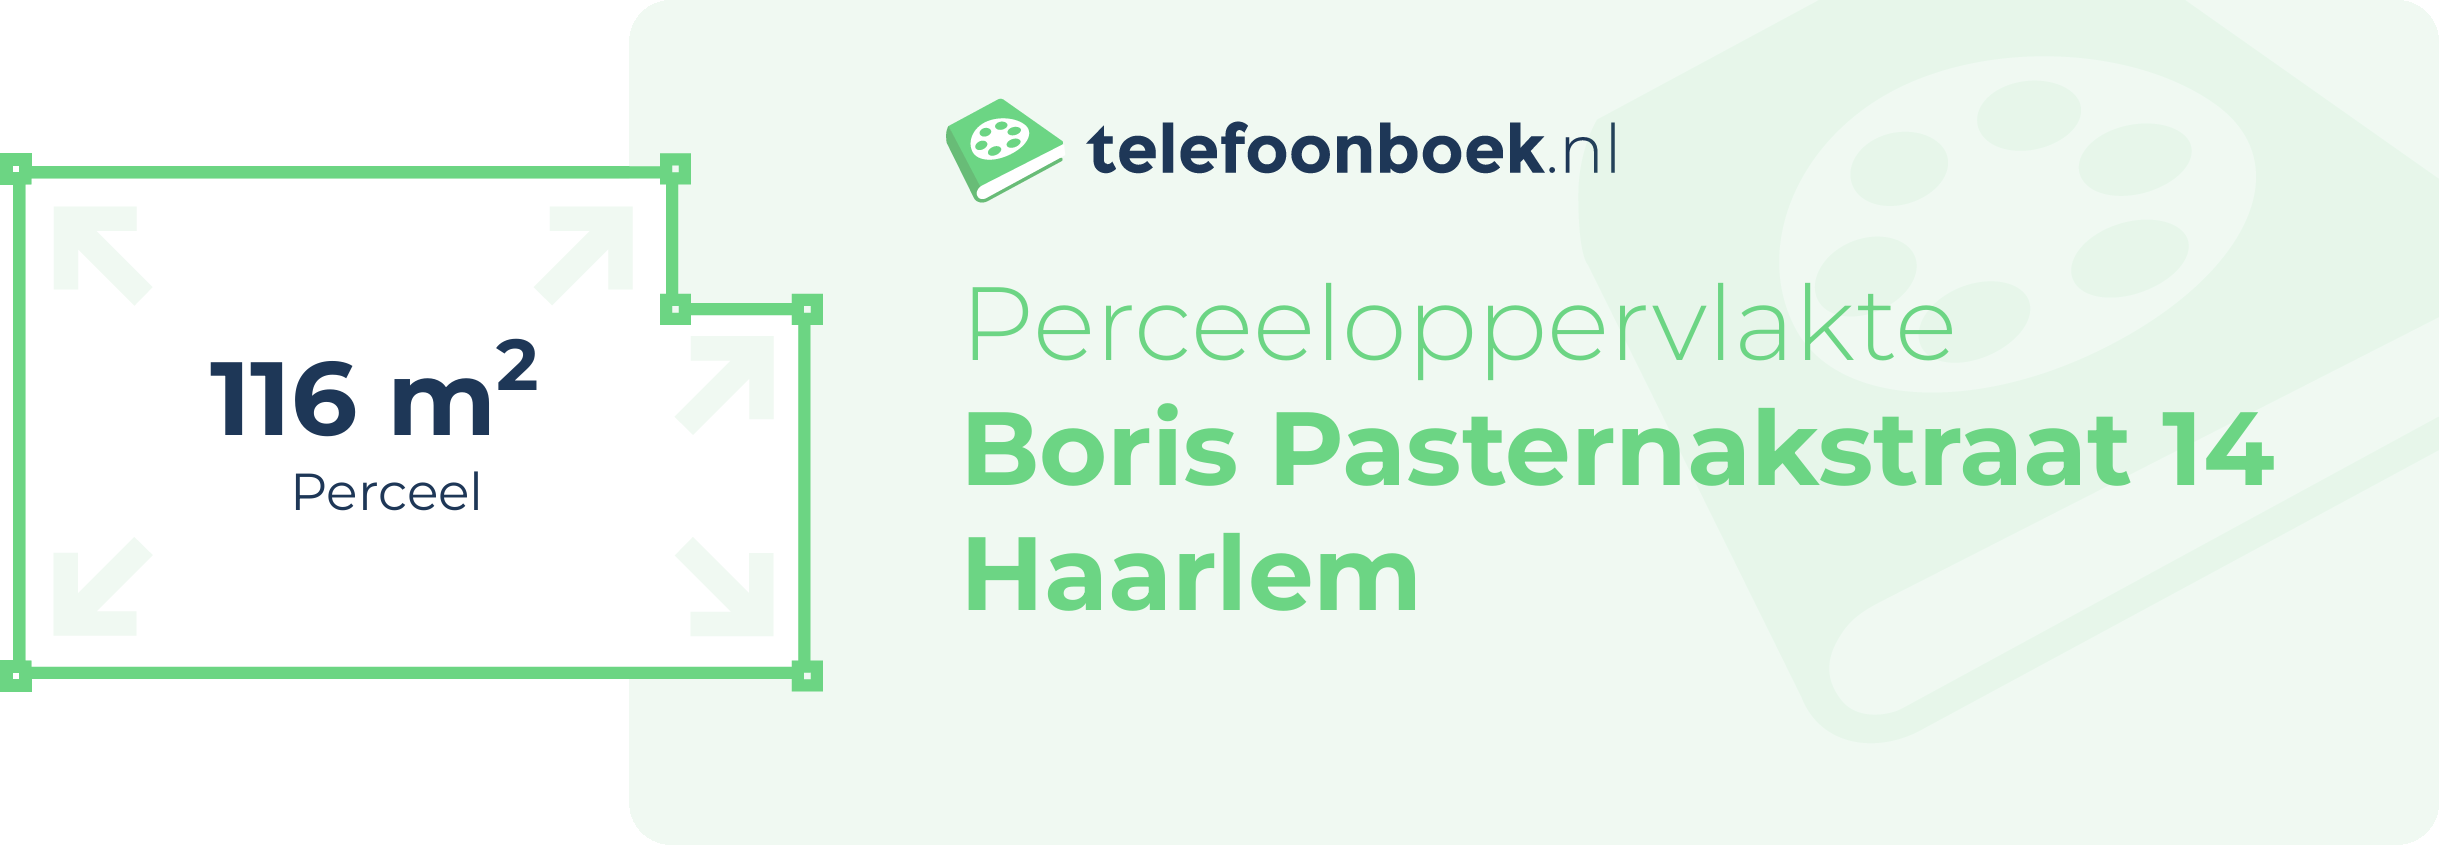 Perceeloppervlakte Boris Pasternakstraat 14 Haarlem